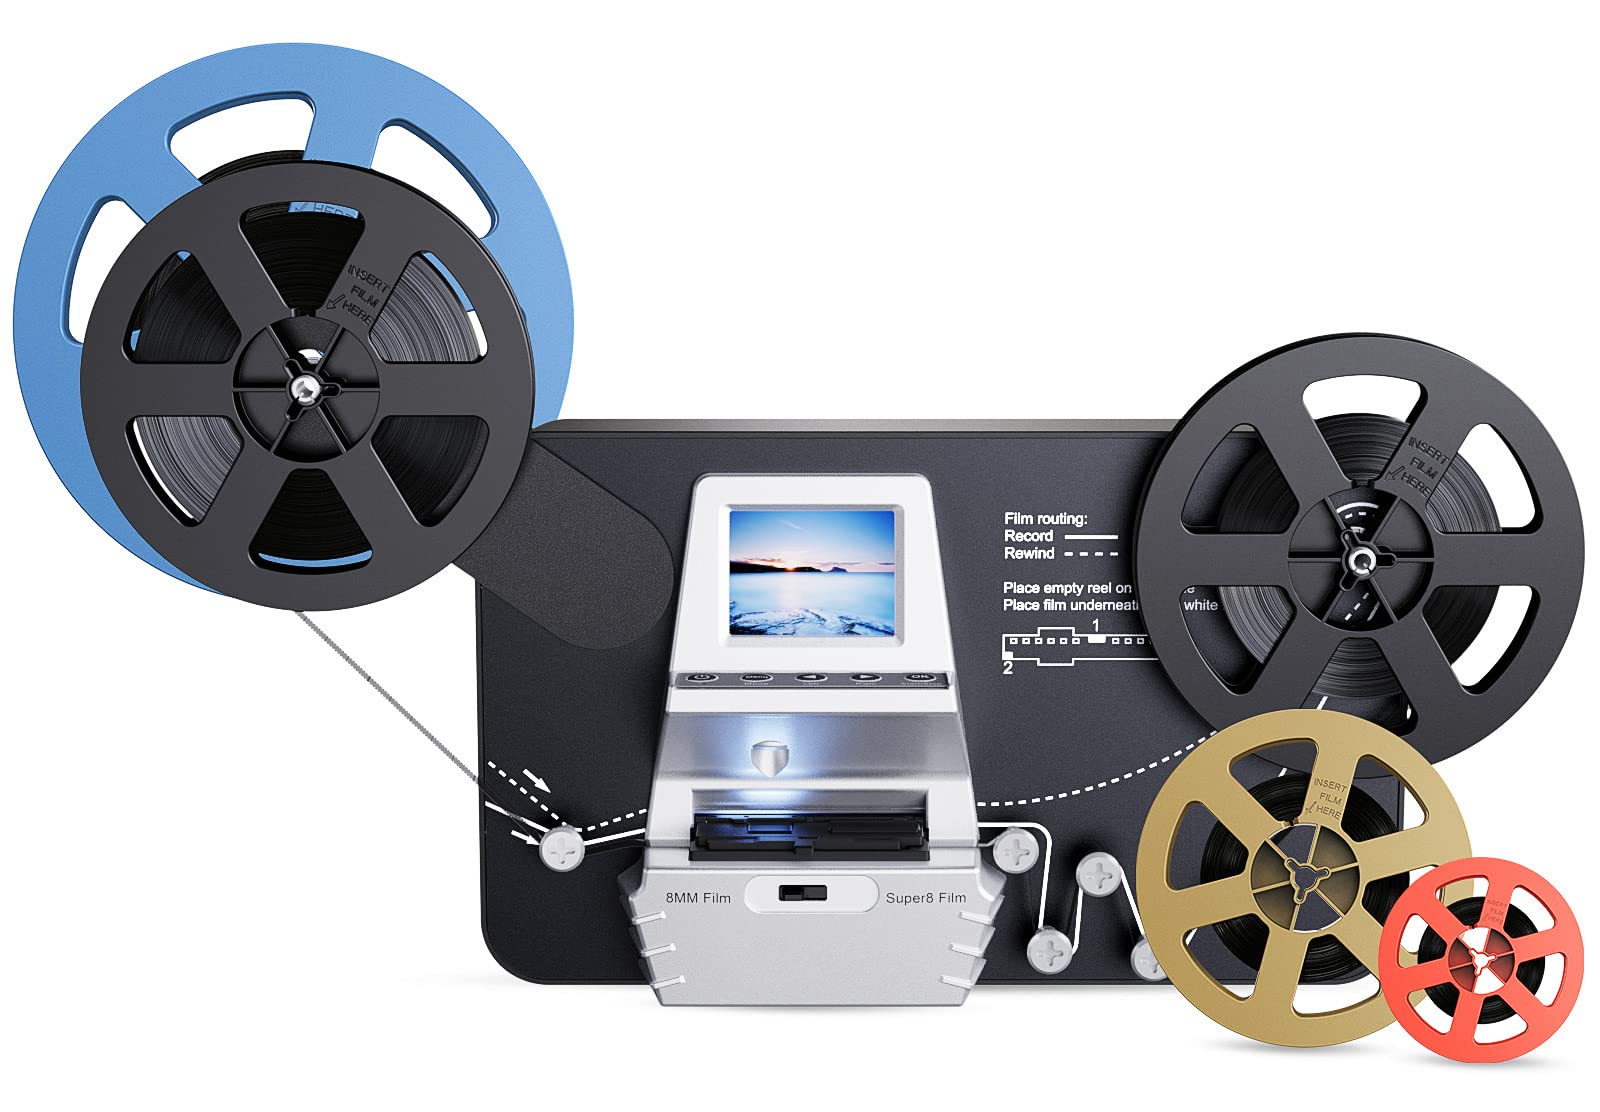  eyesen 8mm & Super 8 Reels to Digital Film Scanner Converter, Film Digitizer with 2.4